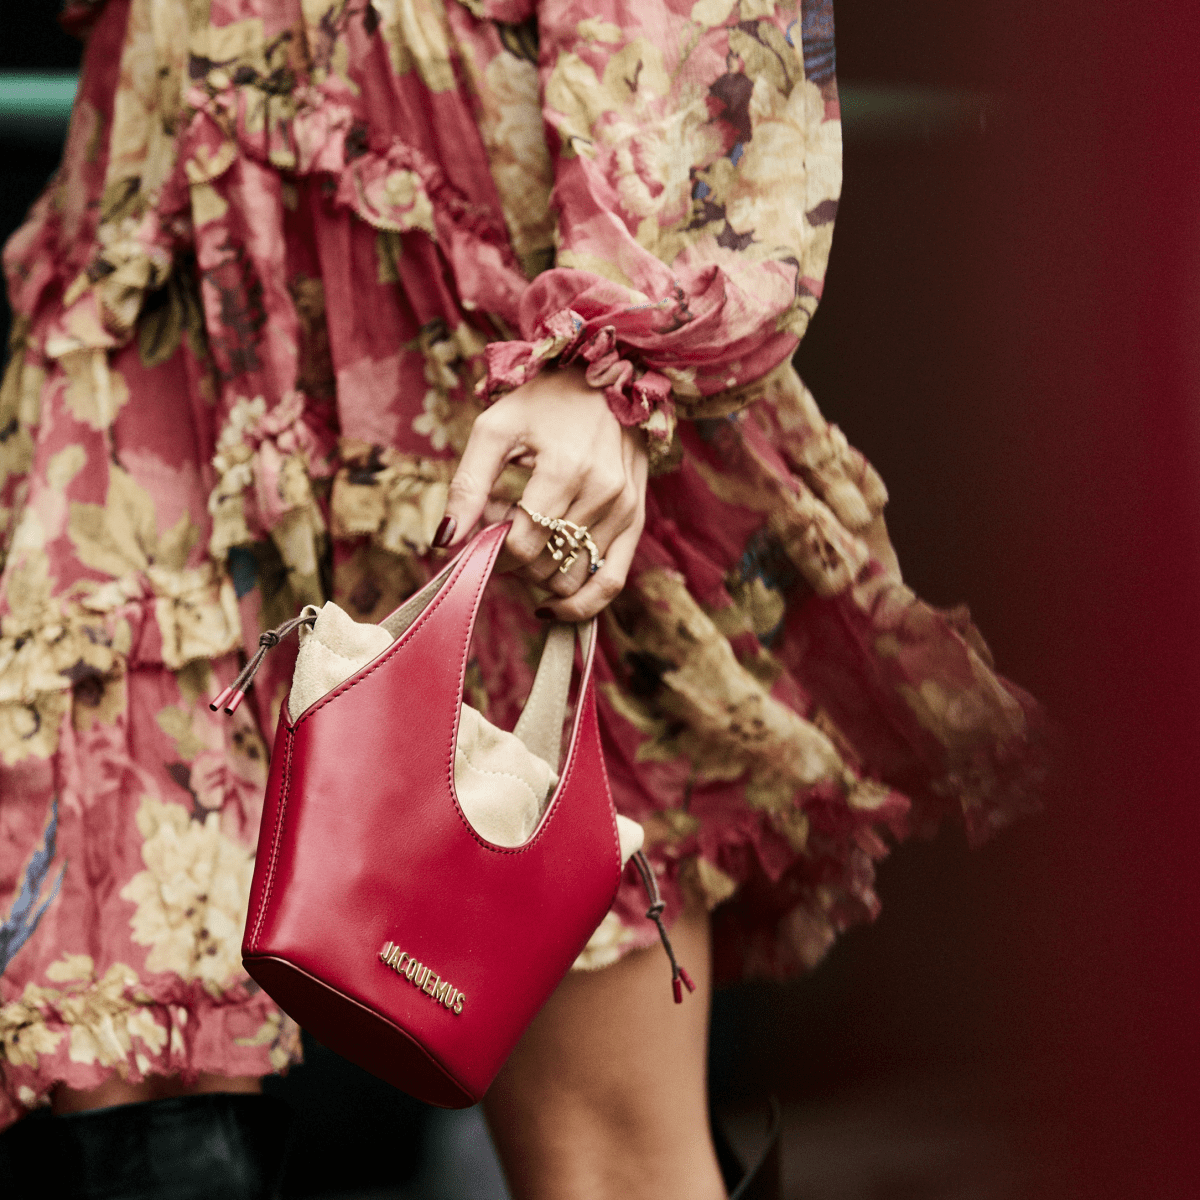 Gucci Soho Interlocking GG Red Leather Chain Flap Shoulder Bag Handbag  Italy New: Handbags: Amazon.com